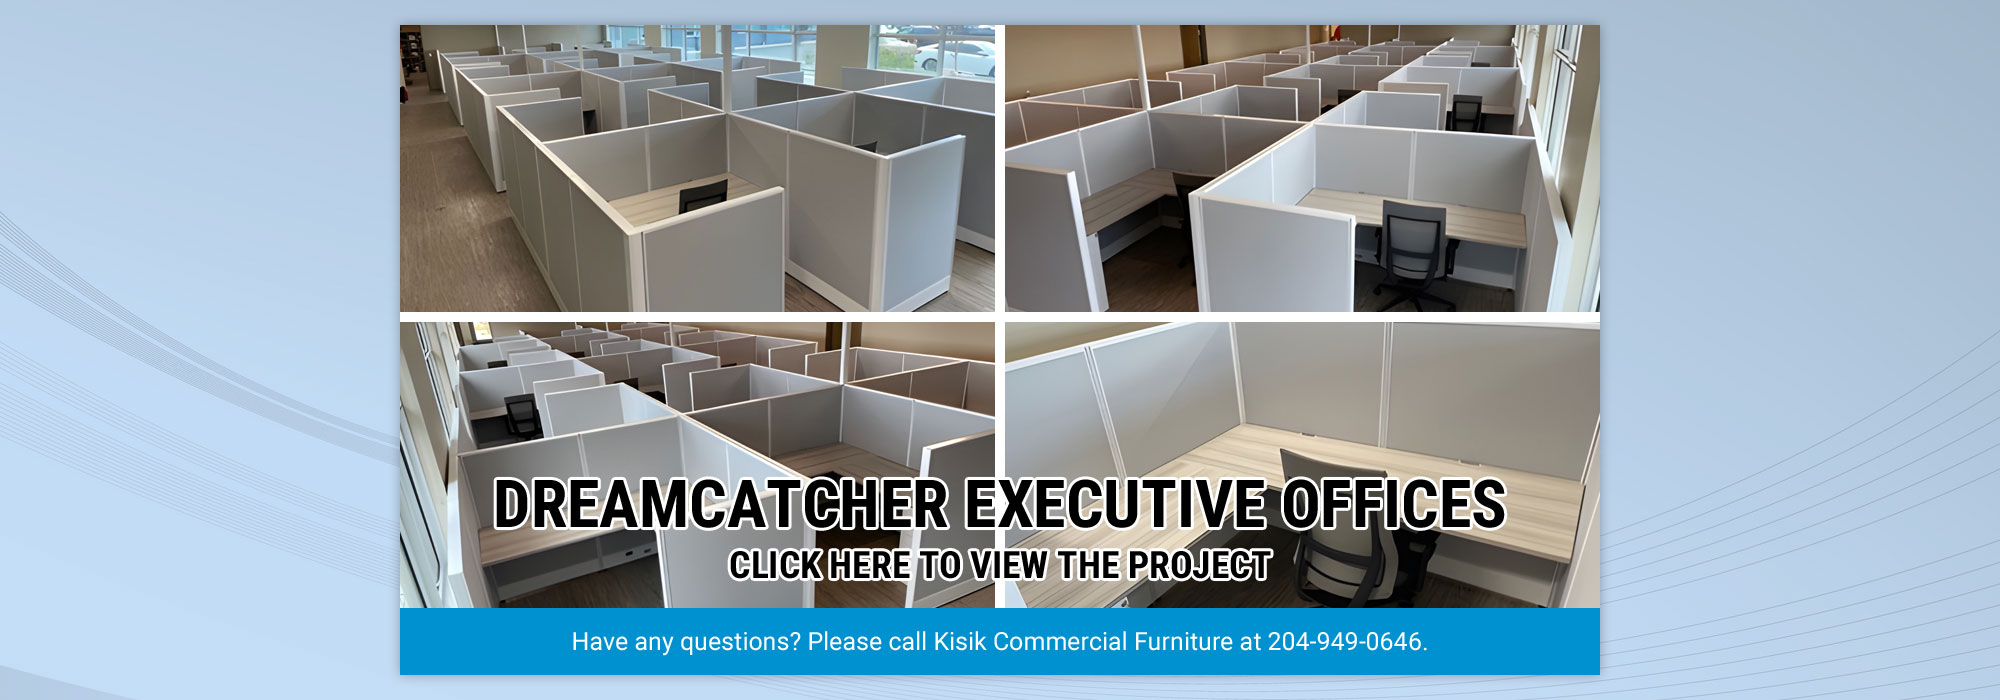 Dreamcatcher Executive Offices